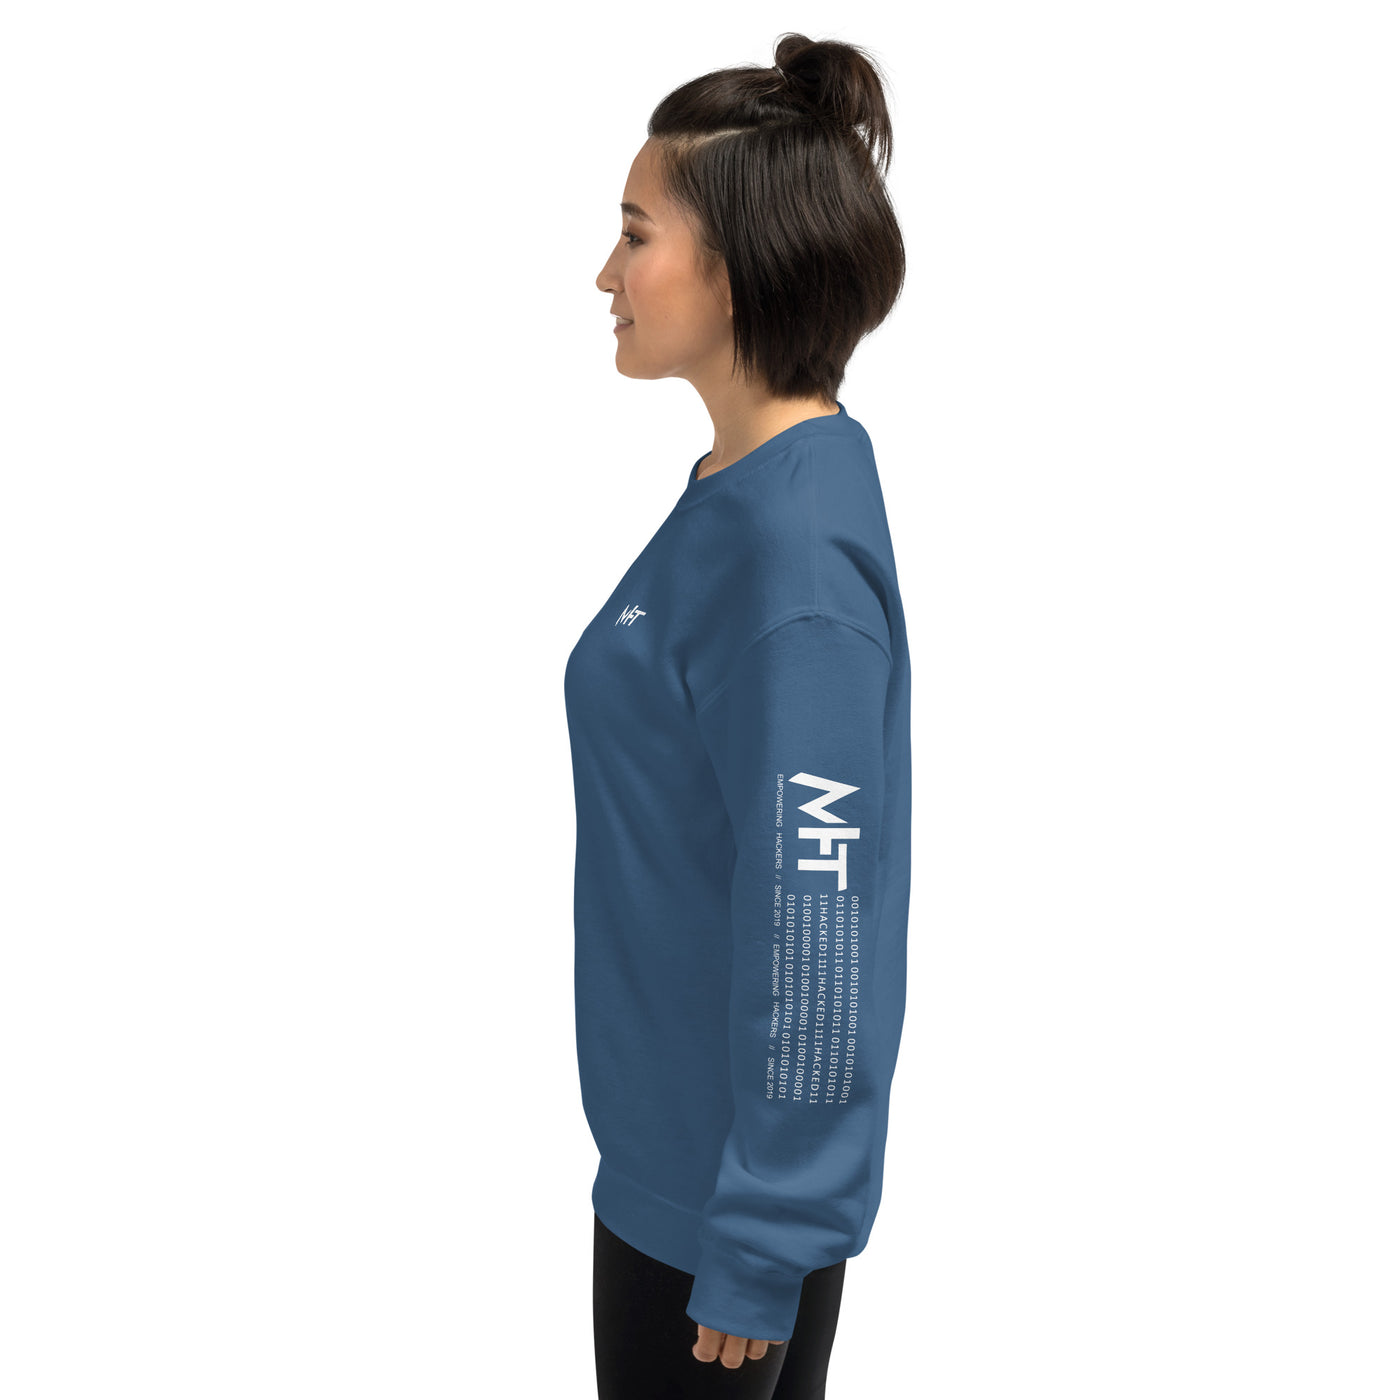 Cyber Security Blue Team V10 - Unisex Sweatshirt ( Back Print )